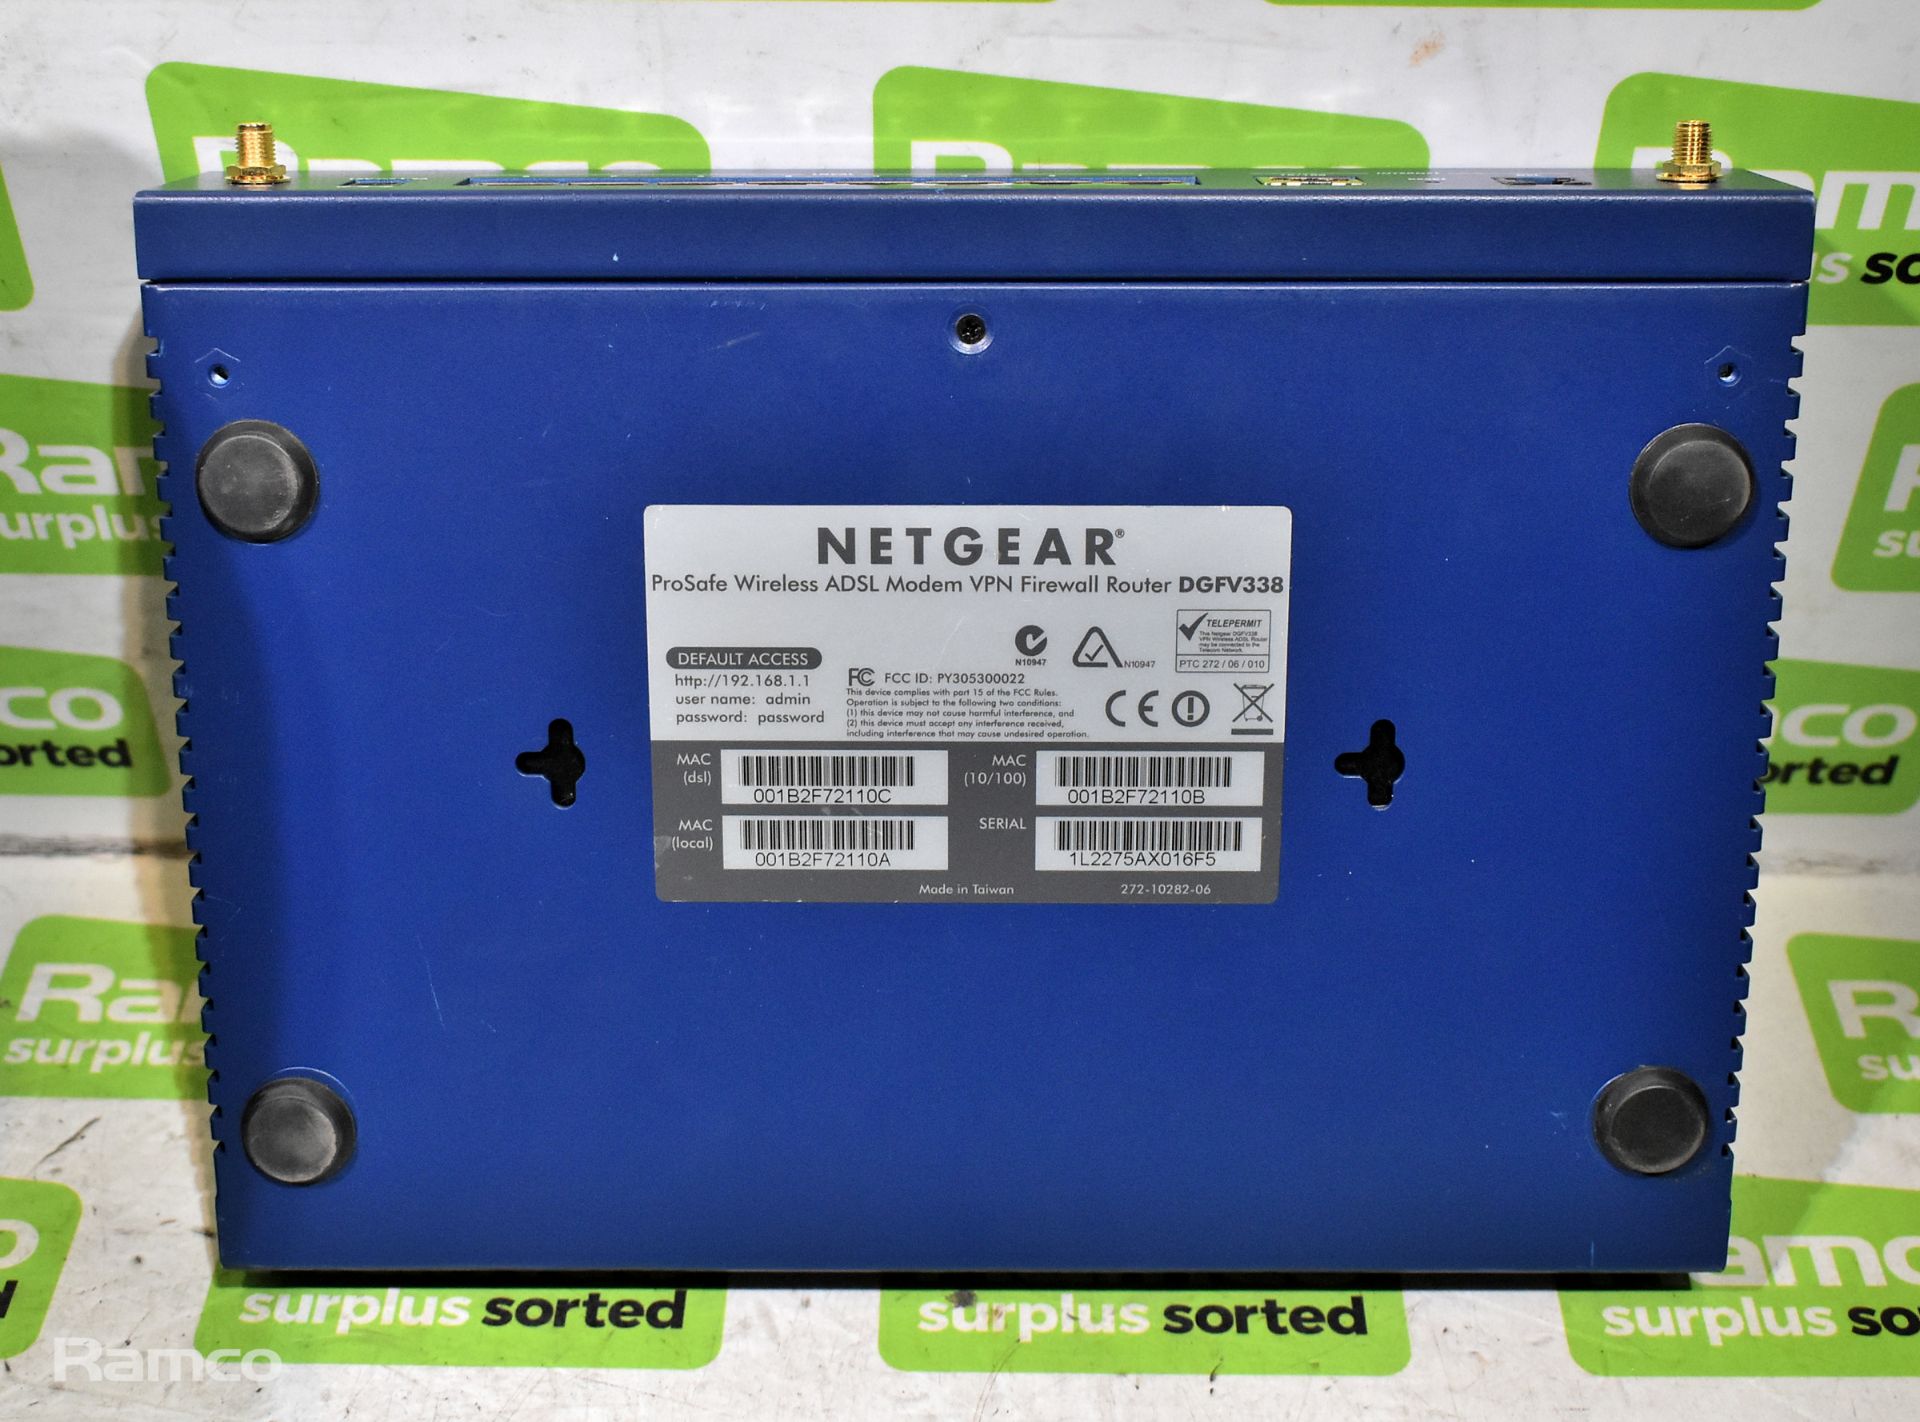 Netgear Prosafe DGFV338 ADSL modem VPN firewall router, Benq MP622 projector with case - Image 4 of 12